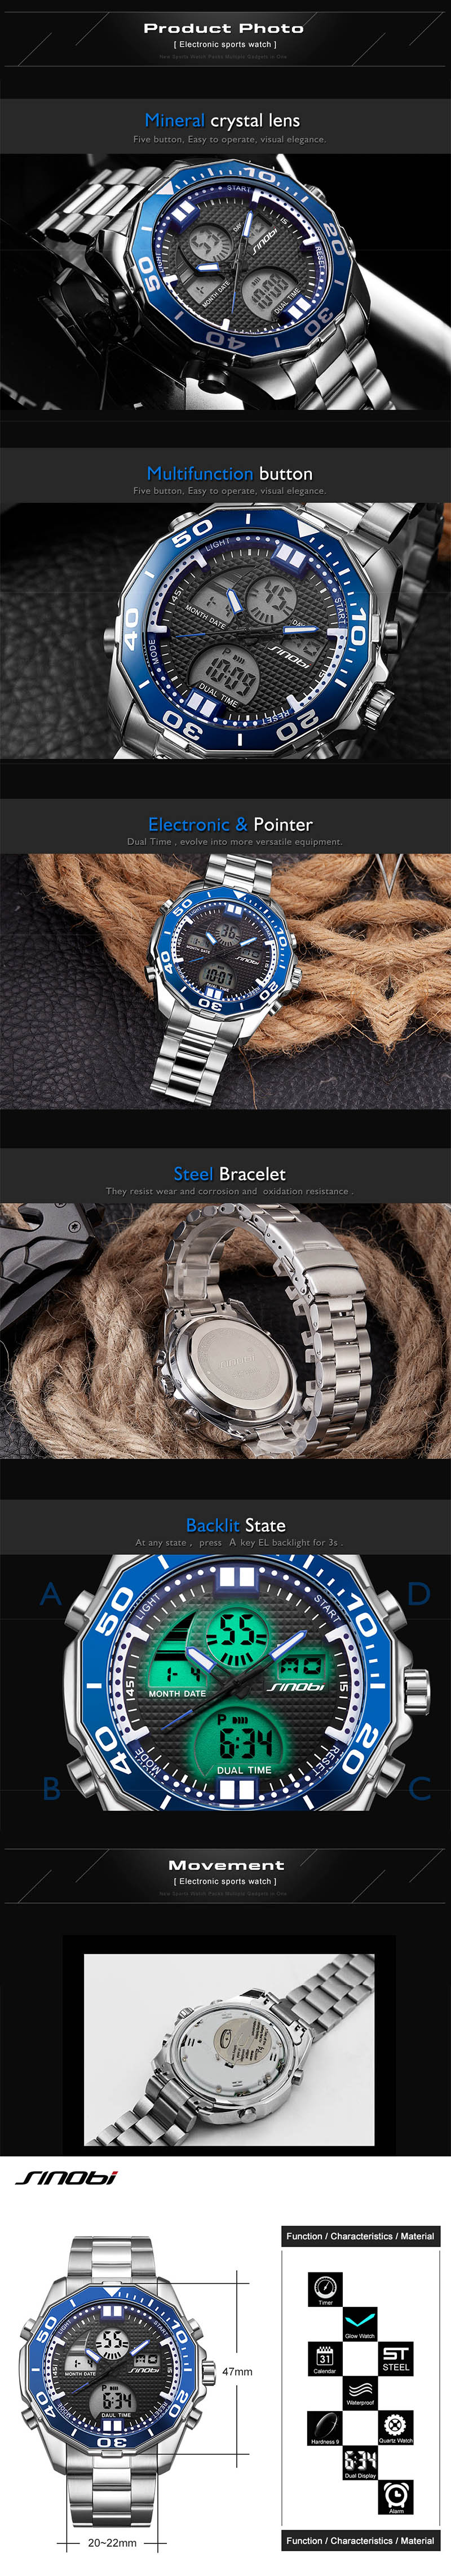 SINOBI-9730-Dual-Display-Digital-Watch-Fashion-Leather-Strap-Men-Luminous-Display-Sport-Watch-1388362